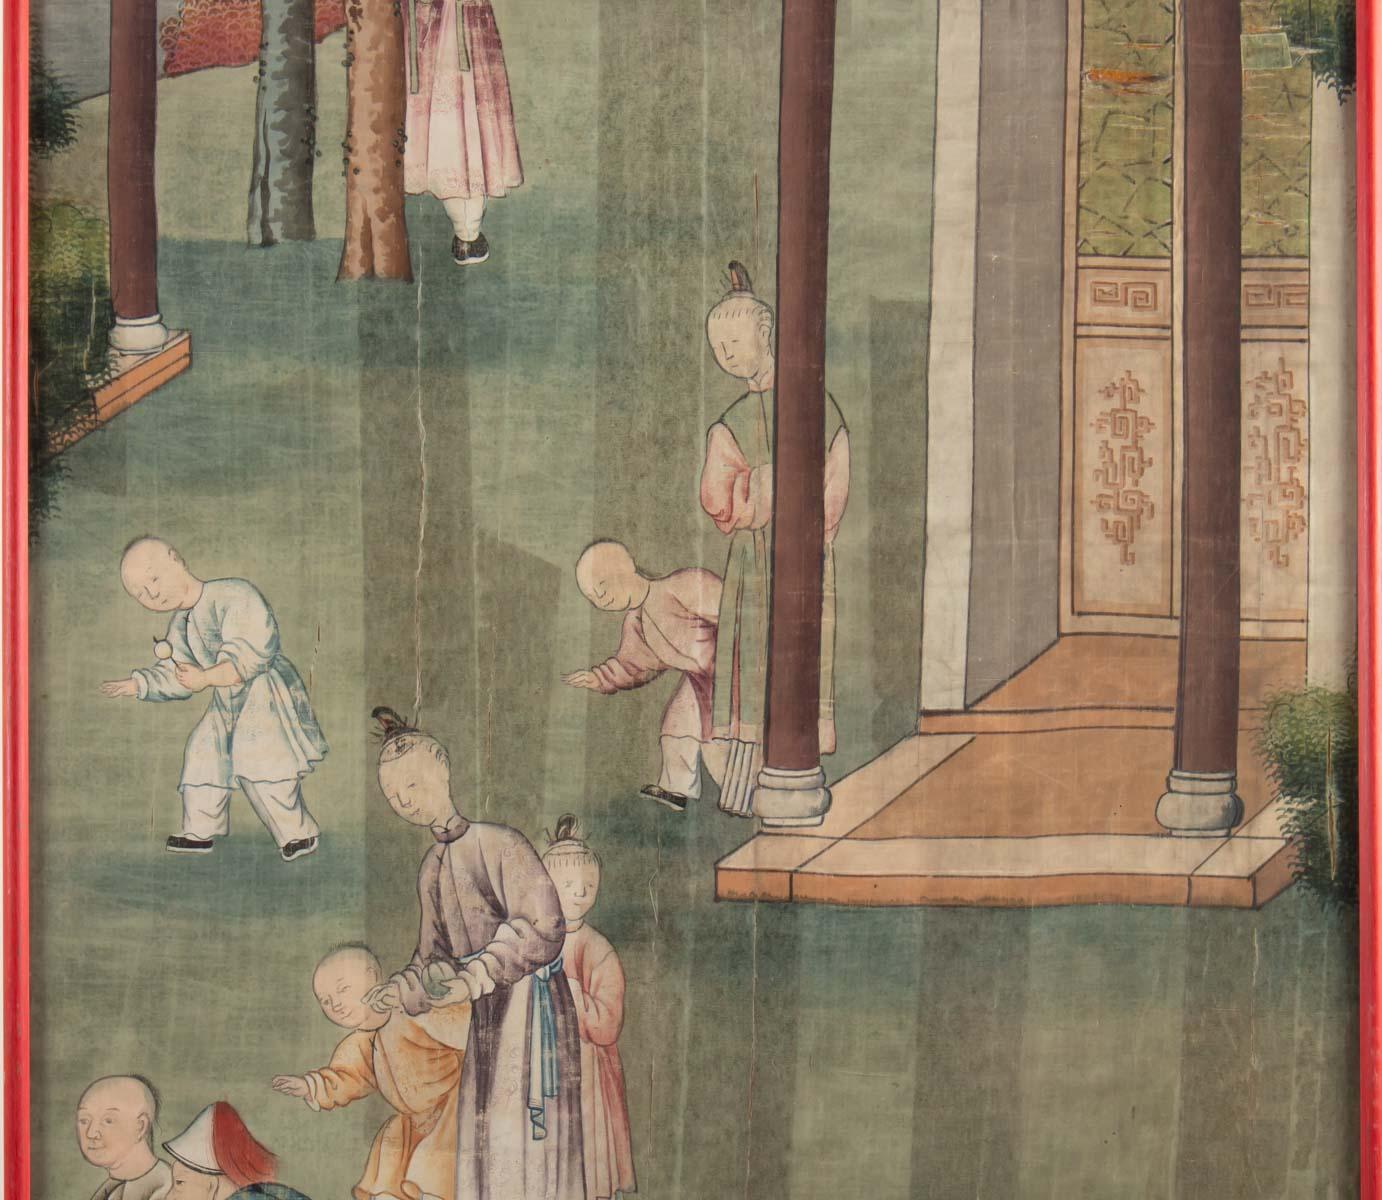 Silk, Chinese painting, 19th century, temple scene, Asia
Measures: H 81cm, W 48cm, W 1cm.